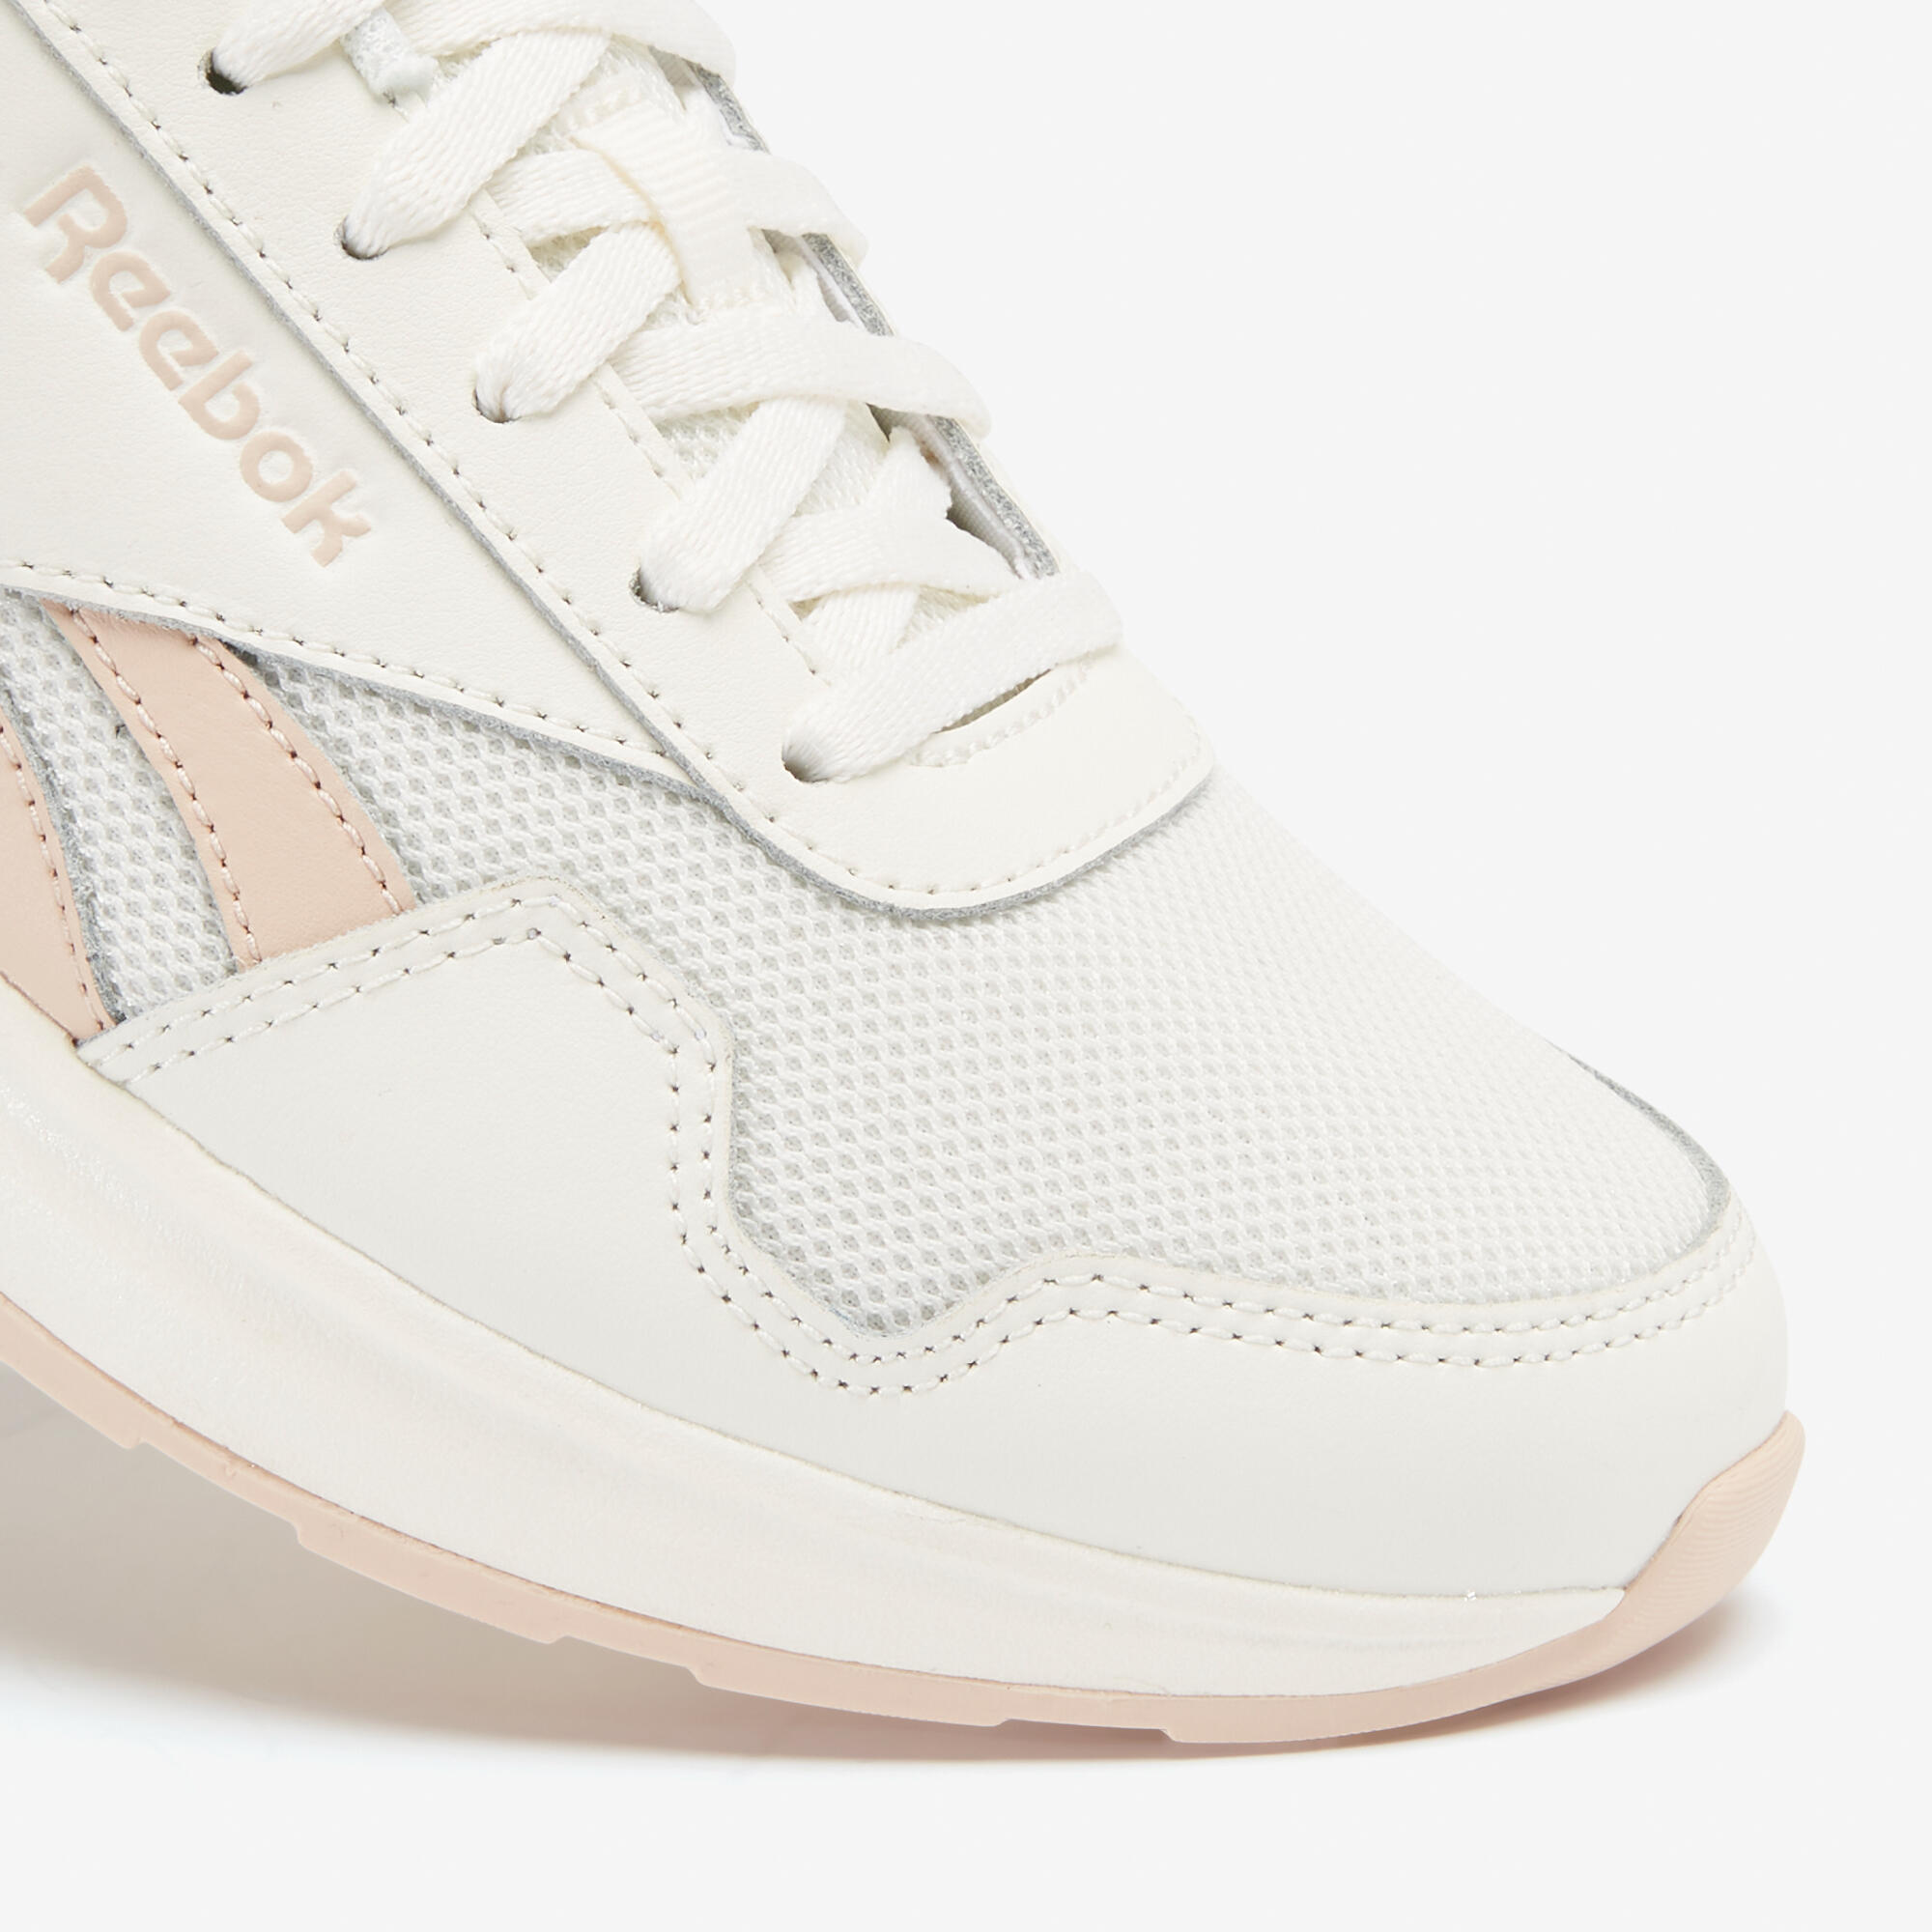 Reebok Classic DMX Urban Walking Shoes - White/Beige 5/7